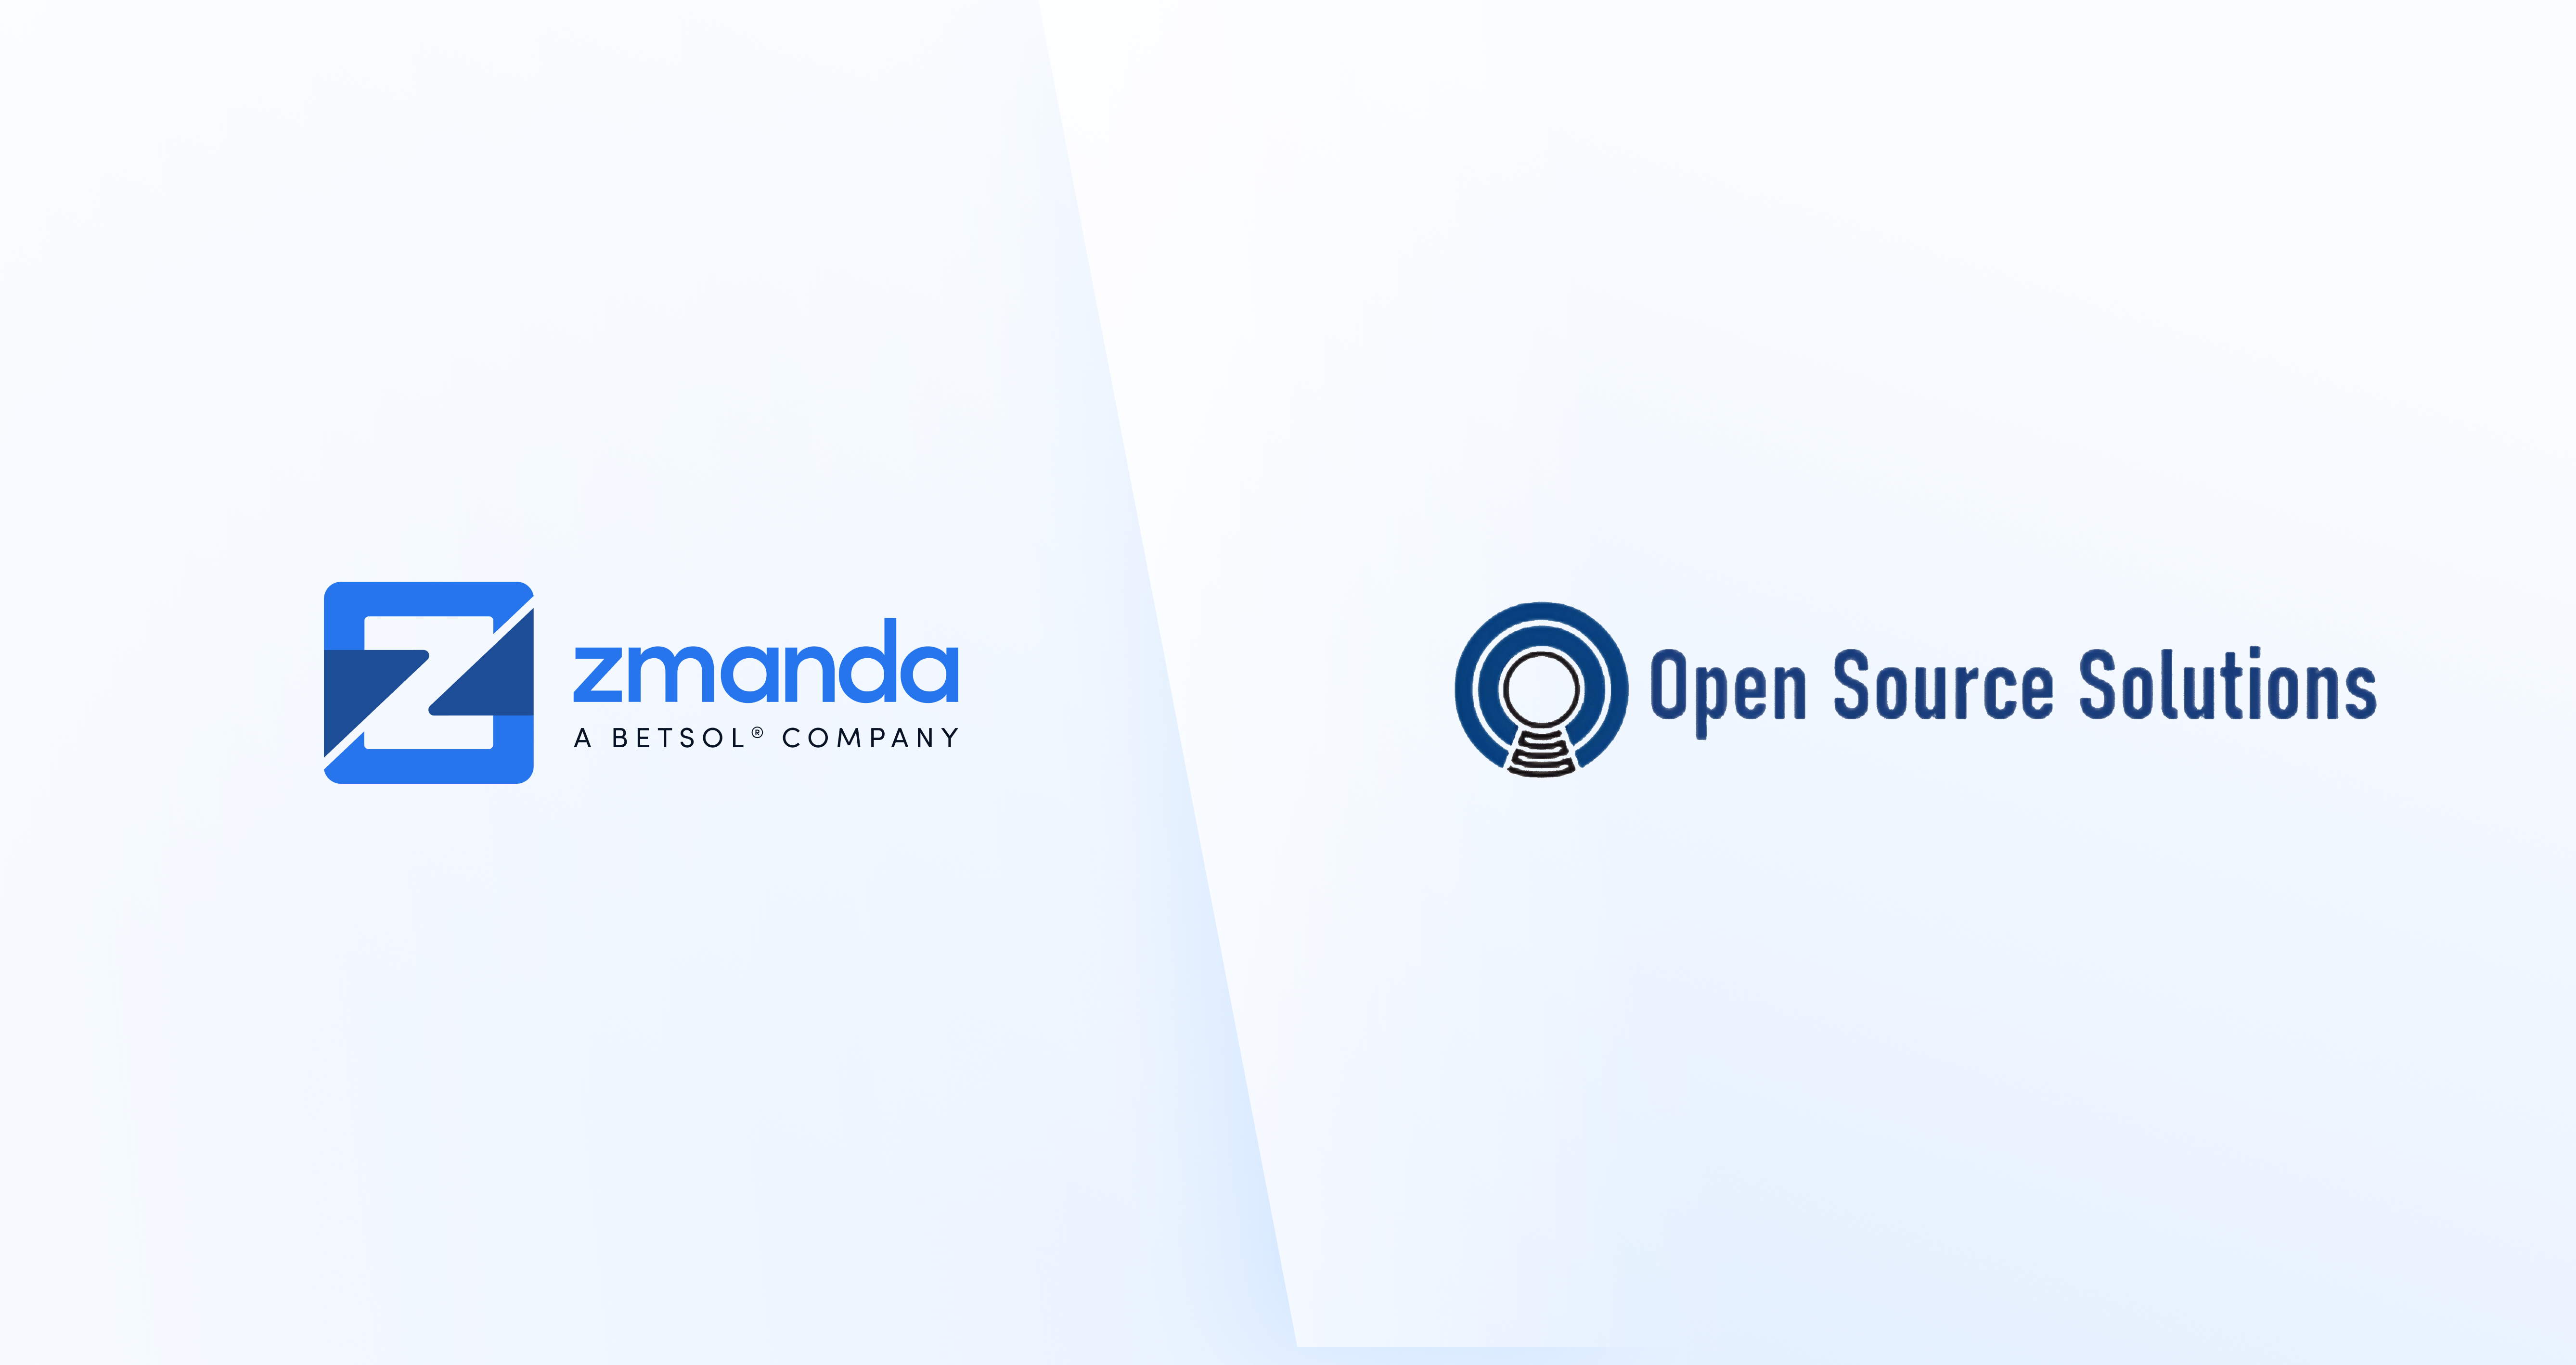 zmanda-open-source-solutions-partnership